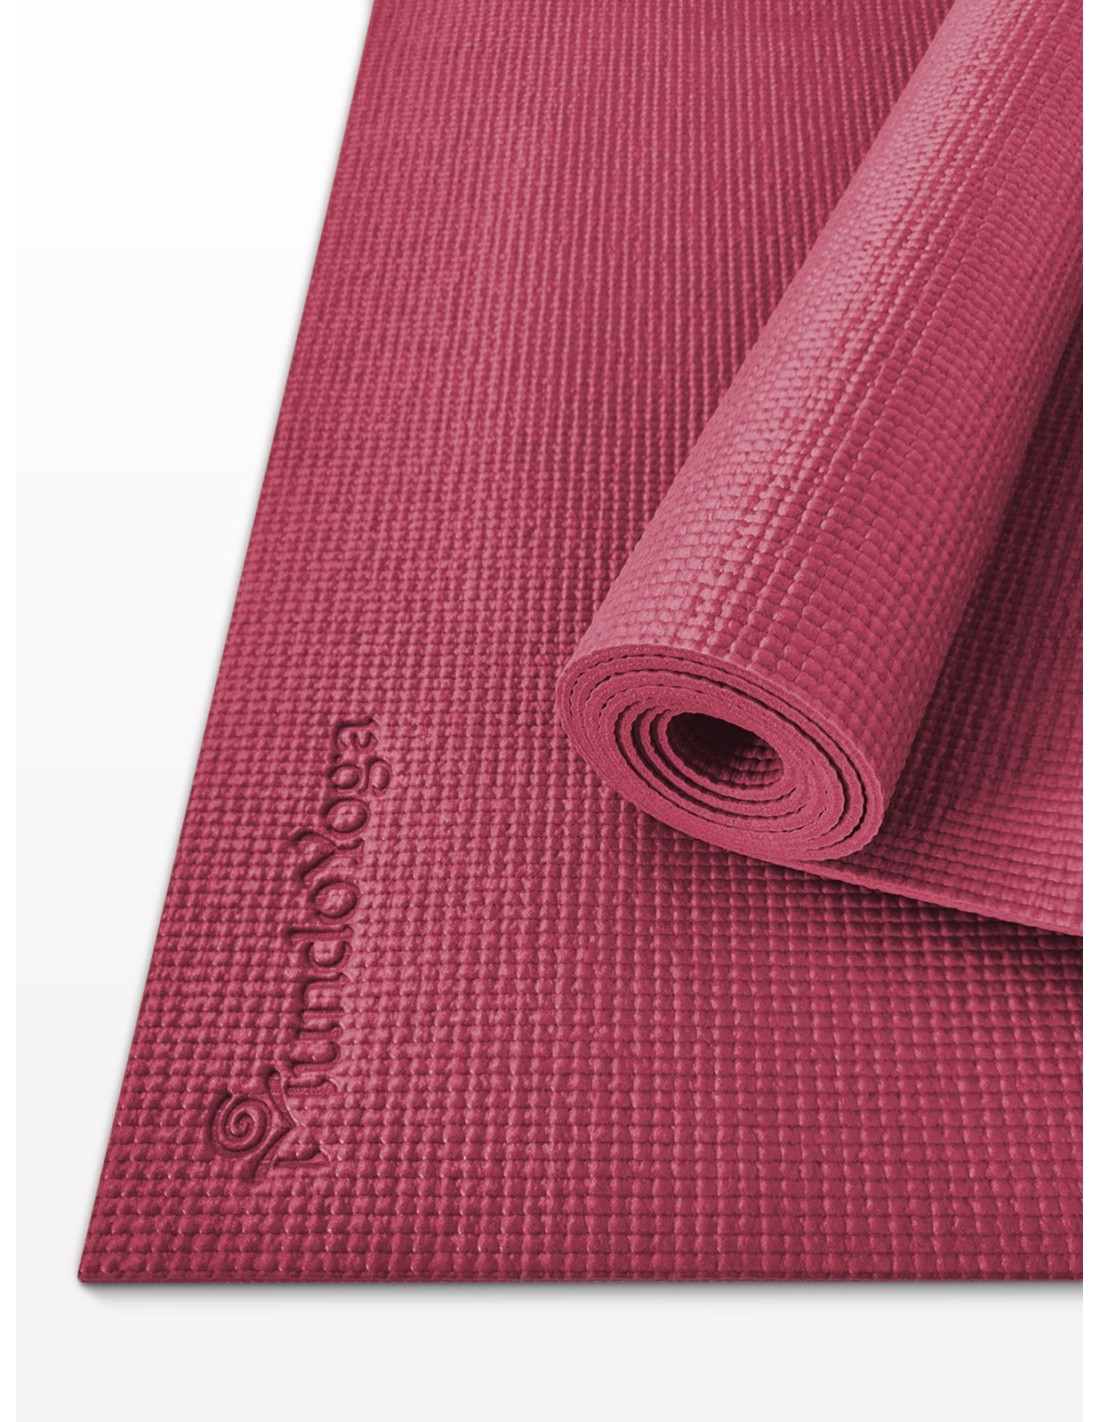 Esterilla Yoga Antideslizante MundoYoga 4mm - Esterillas para Yoga